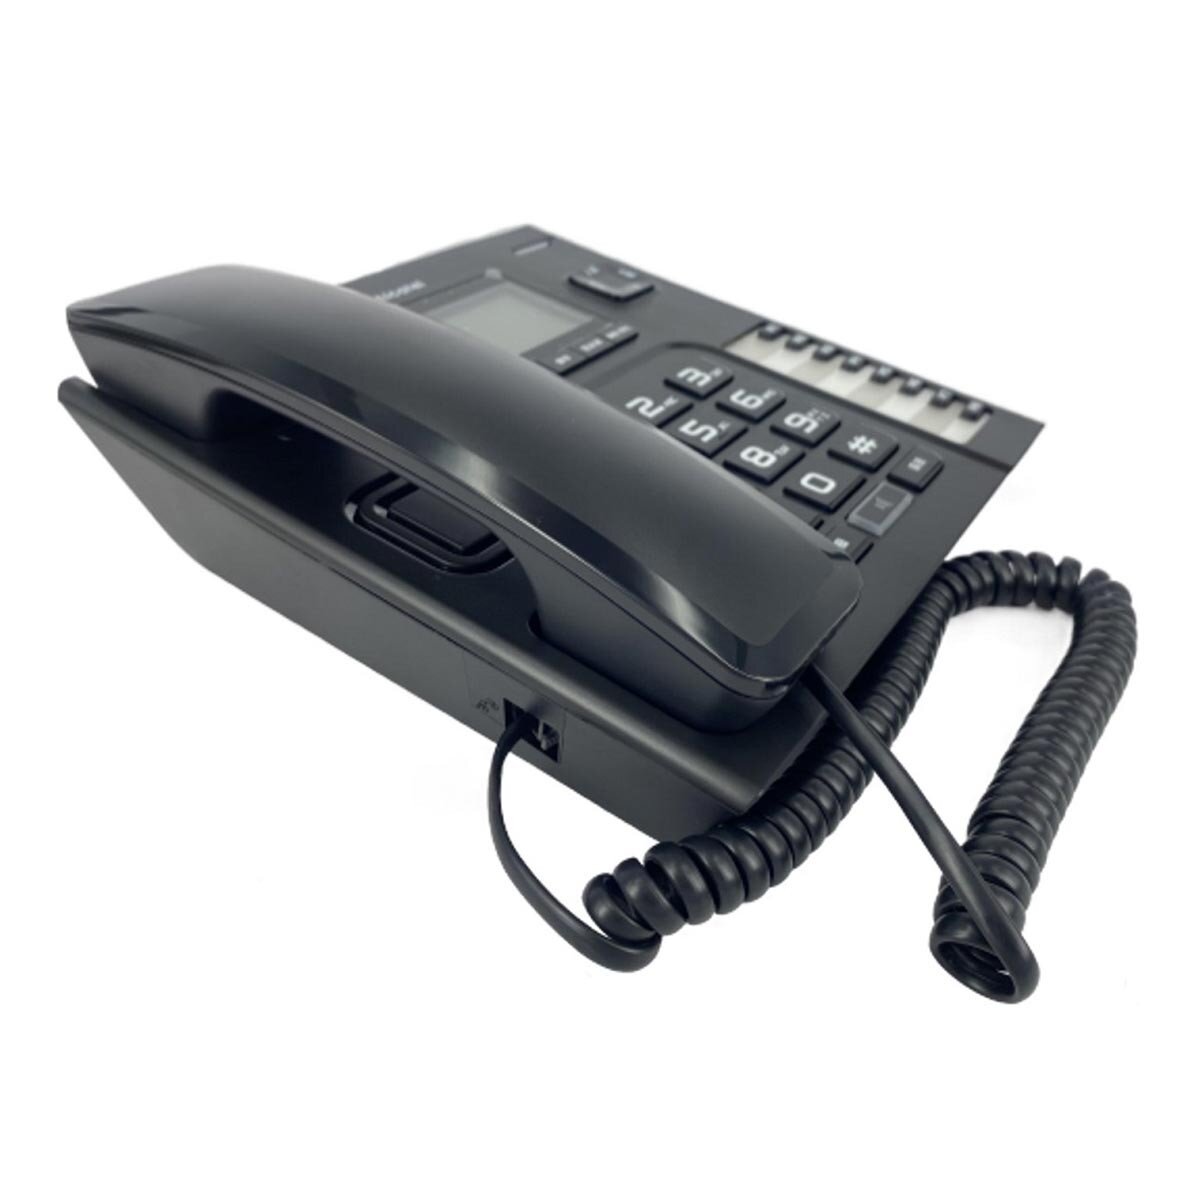 Alcatel 交換機專用家用電話 T76 TW 黑